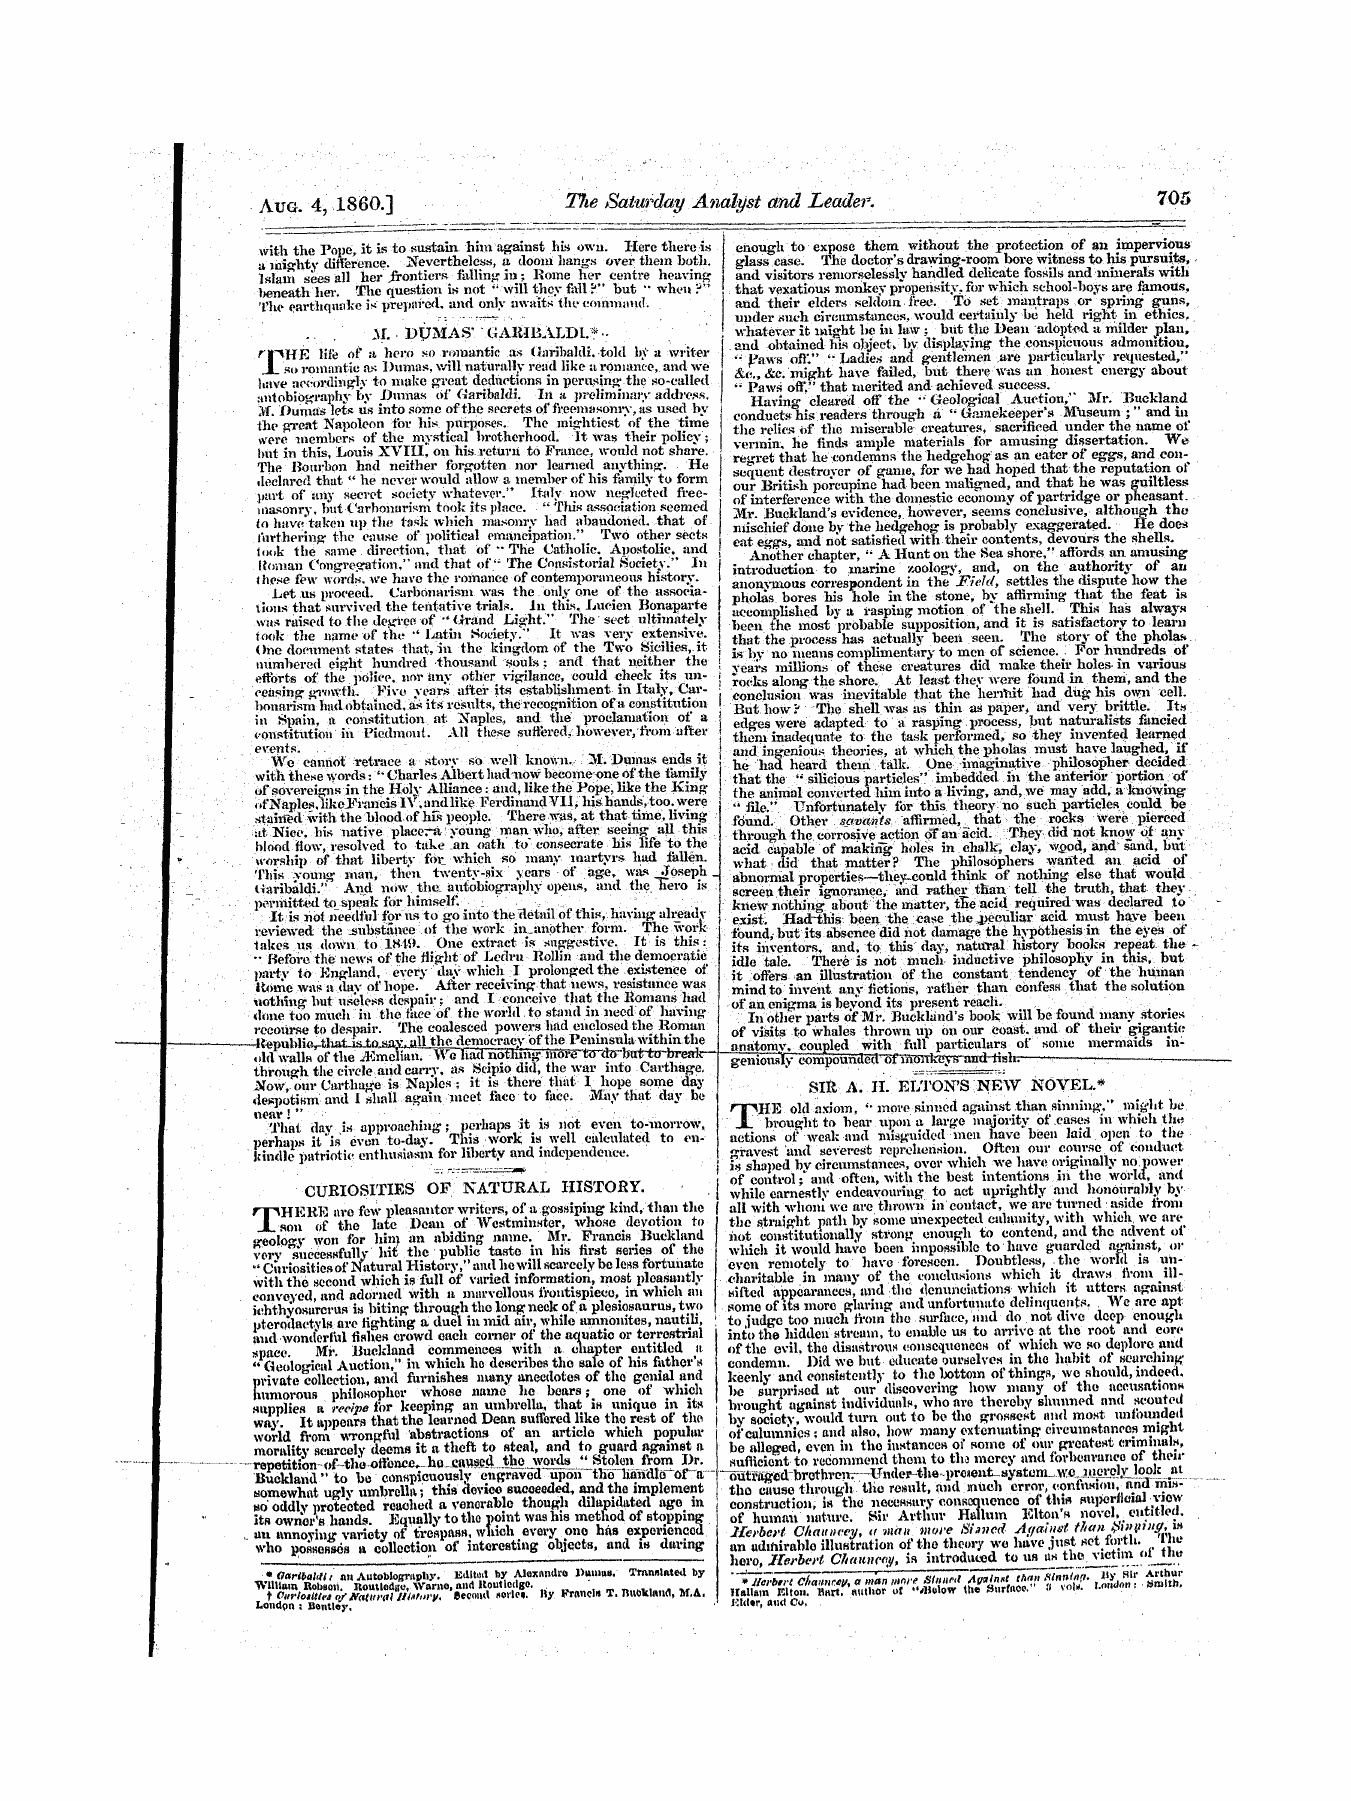 Leader (1850-1860): jS F Y, 1st edition - Curiosities Of Natural Iiistojry.